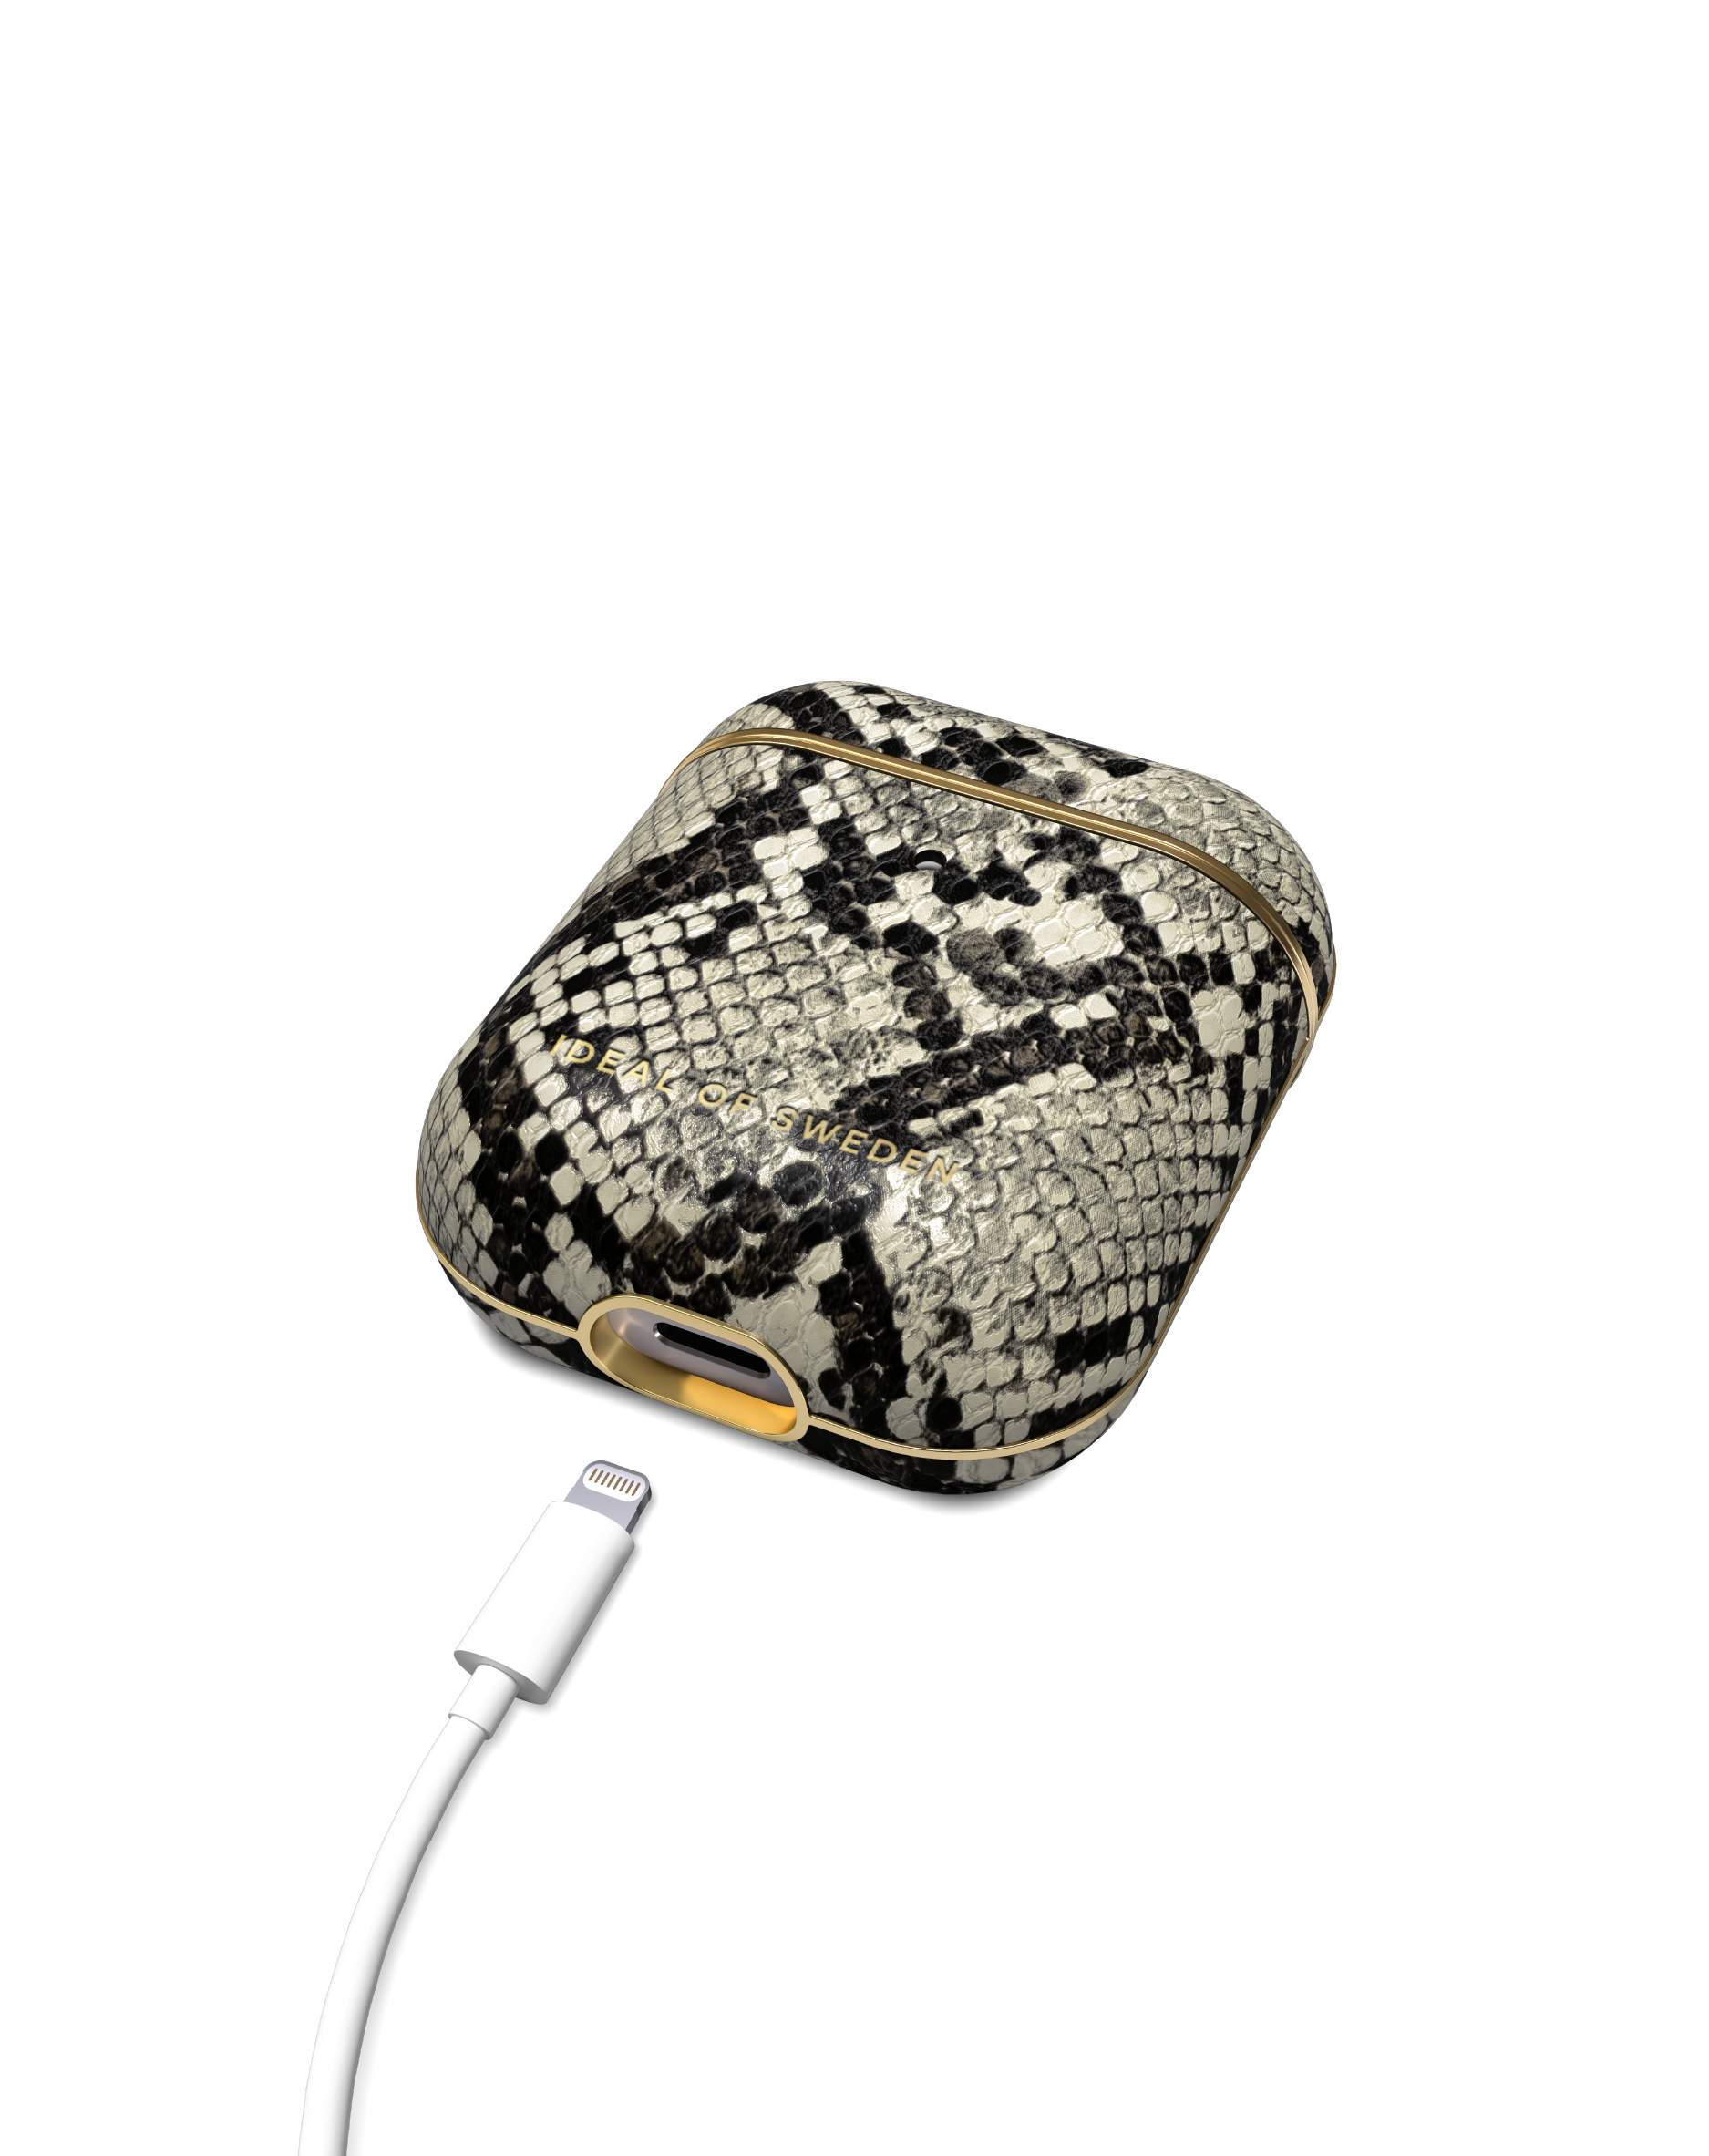 IDEAL OF SWEDEN IDFAPC-203 AirPod Python Cover Full passend Desert Apple für: Case